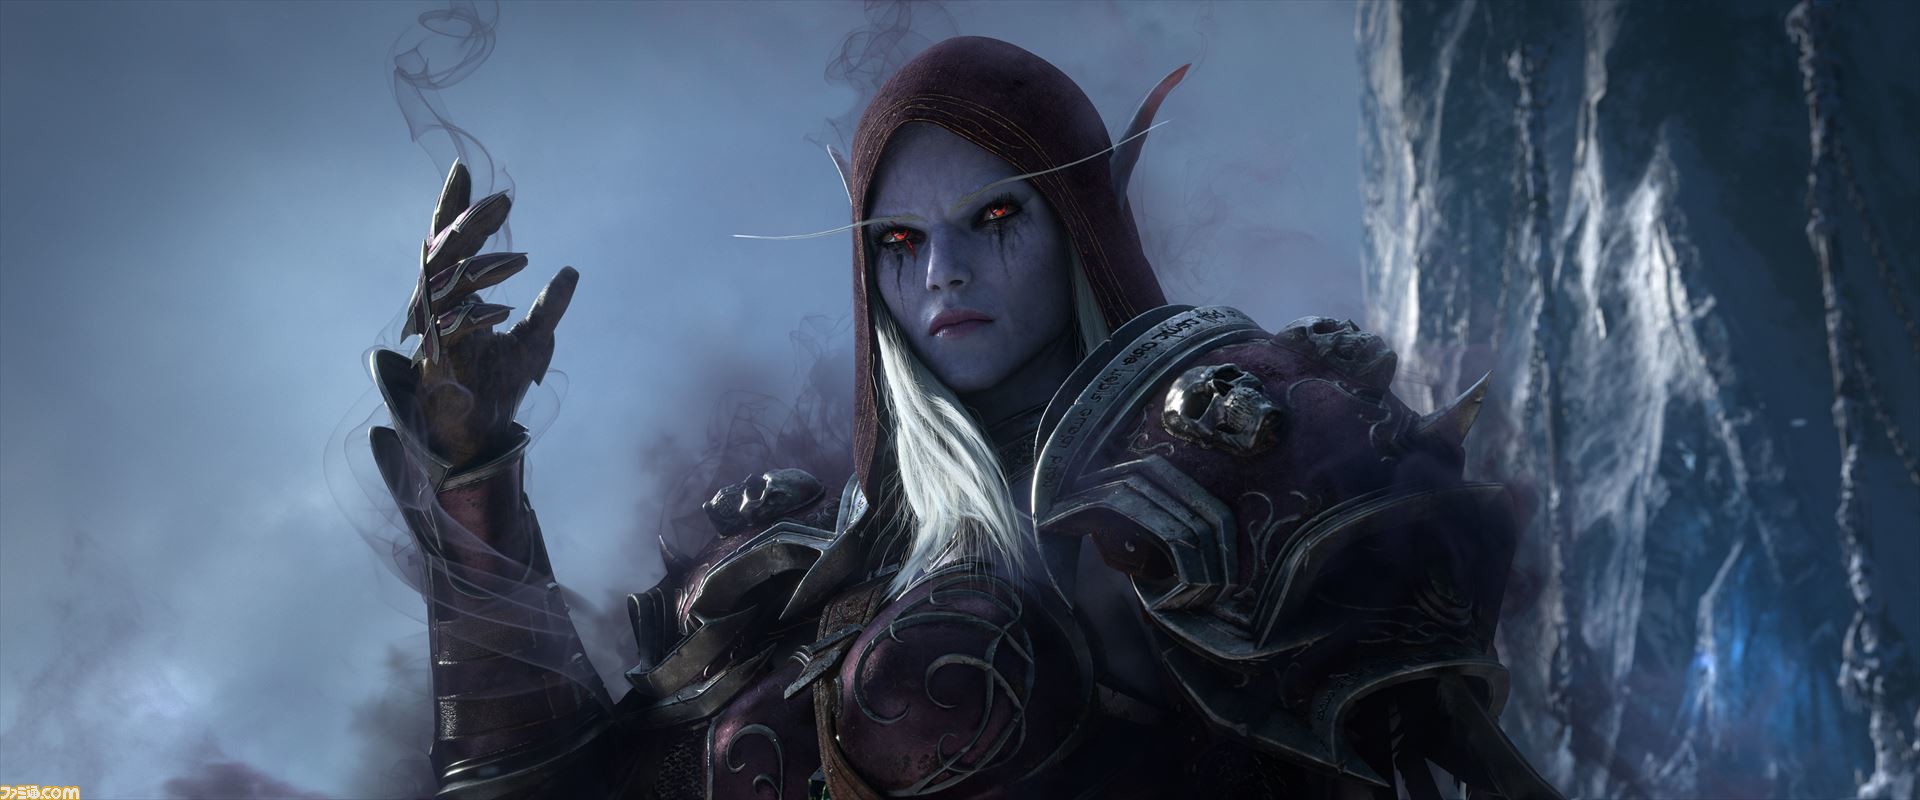 World Of Warcraft 新拡張版 シャドウランズ が発表 新たに登場するのは死後の世界 シャドウランズ Blizzcon 19 ファミ通 Com